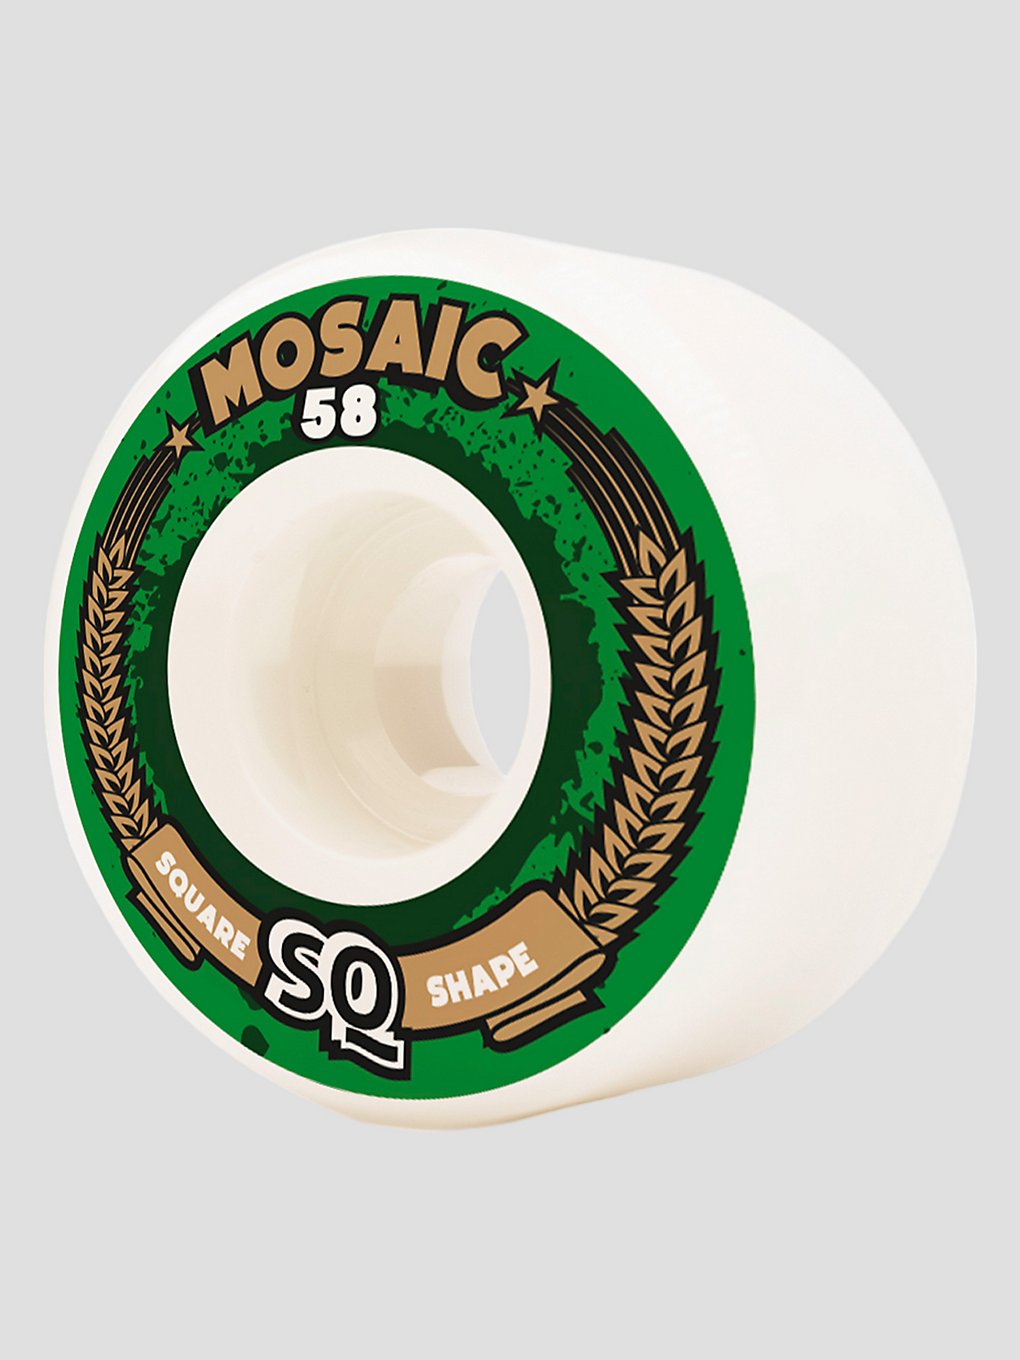 Mosaic Sq Rome 58mm 102A Rollen uni kaufen